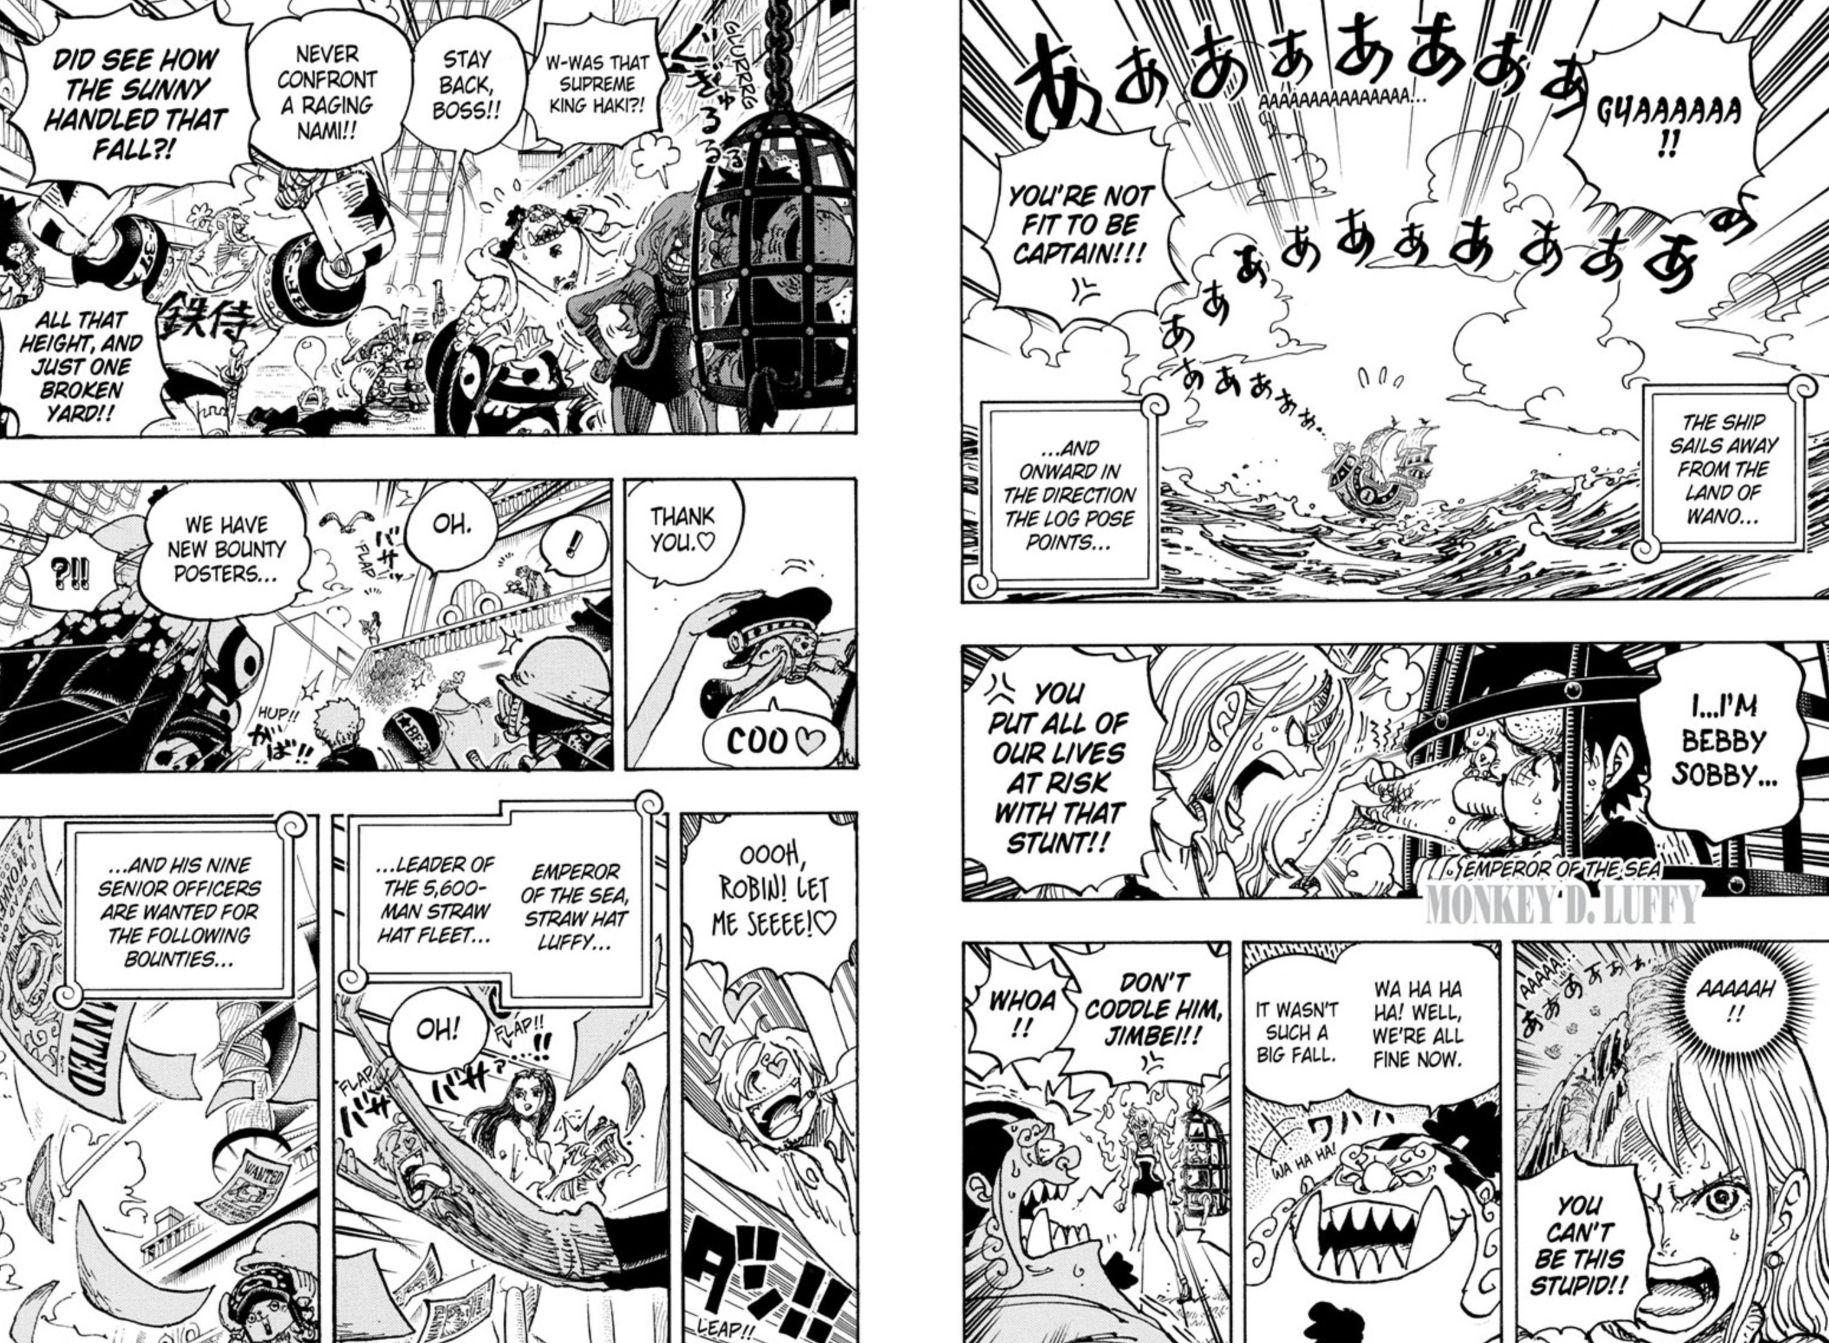 One Piece Chapitre 1058 Pages 2-3